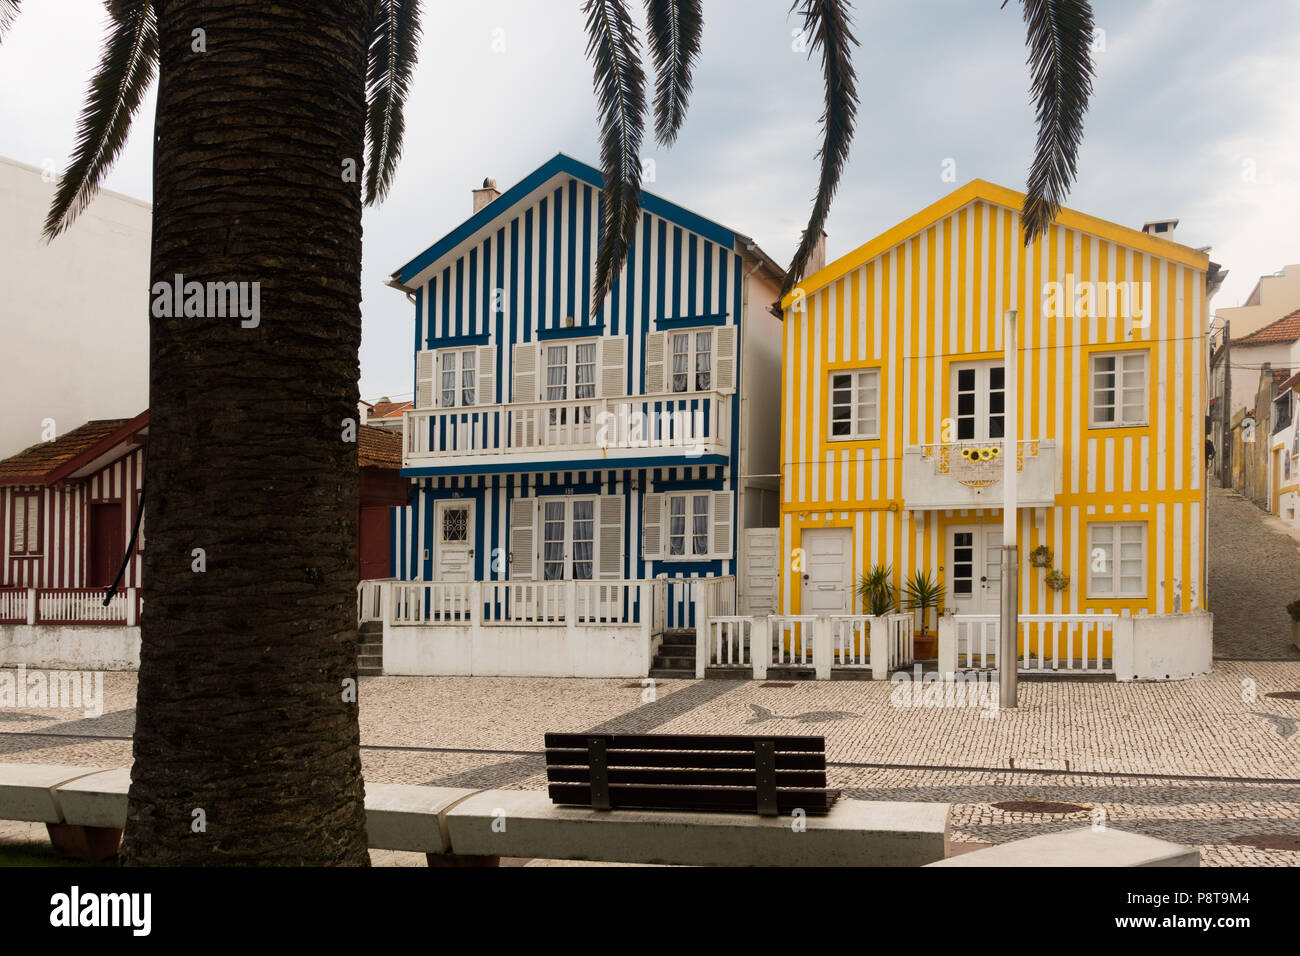 Colourful striped houses at Costa Nova one of the beach areas near Aveiro, Portugal Stock Photo